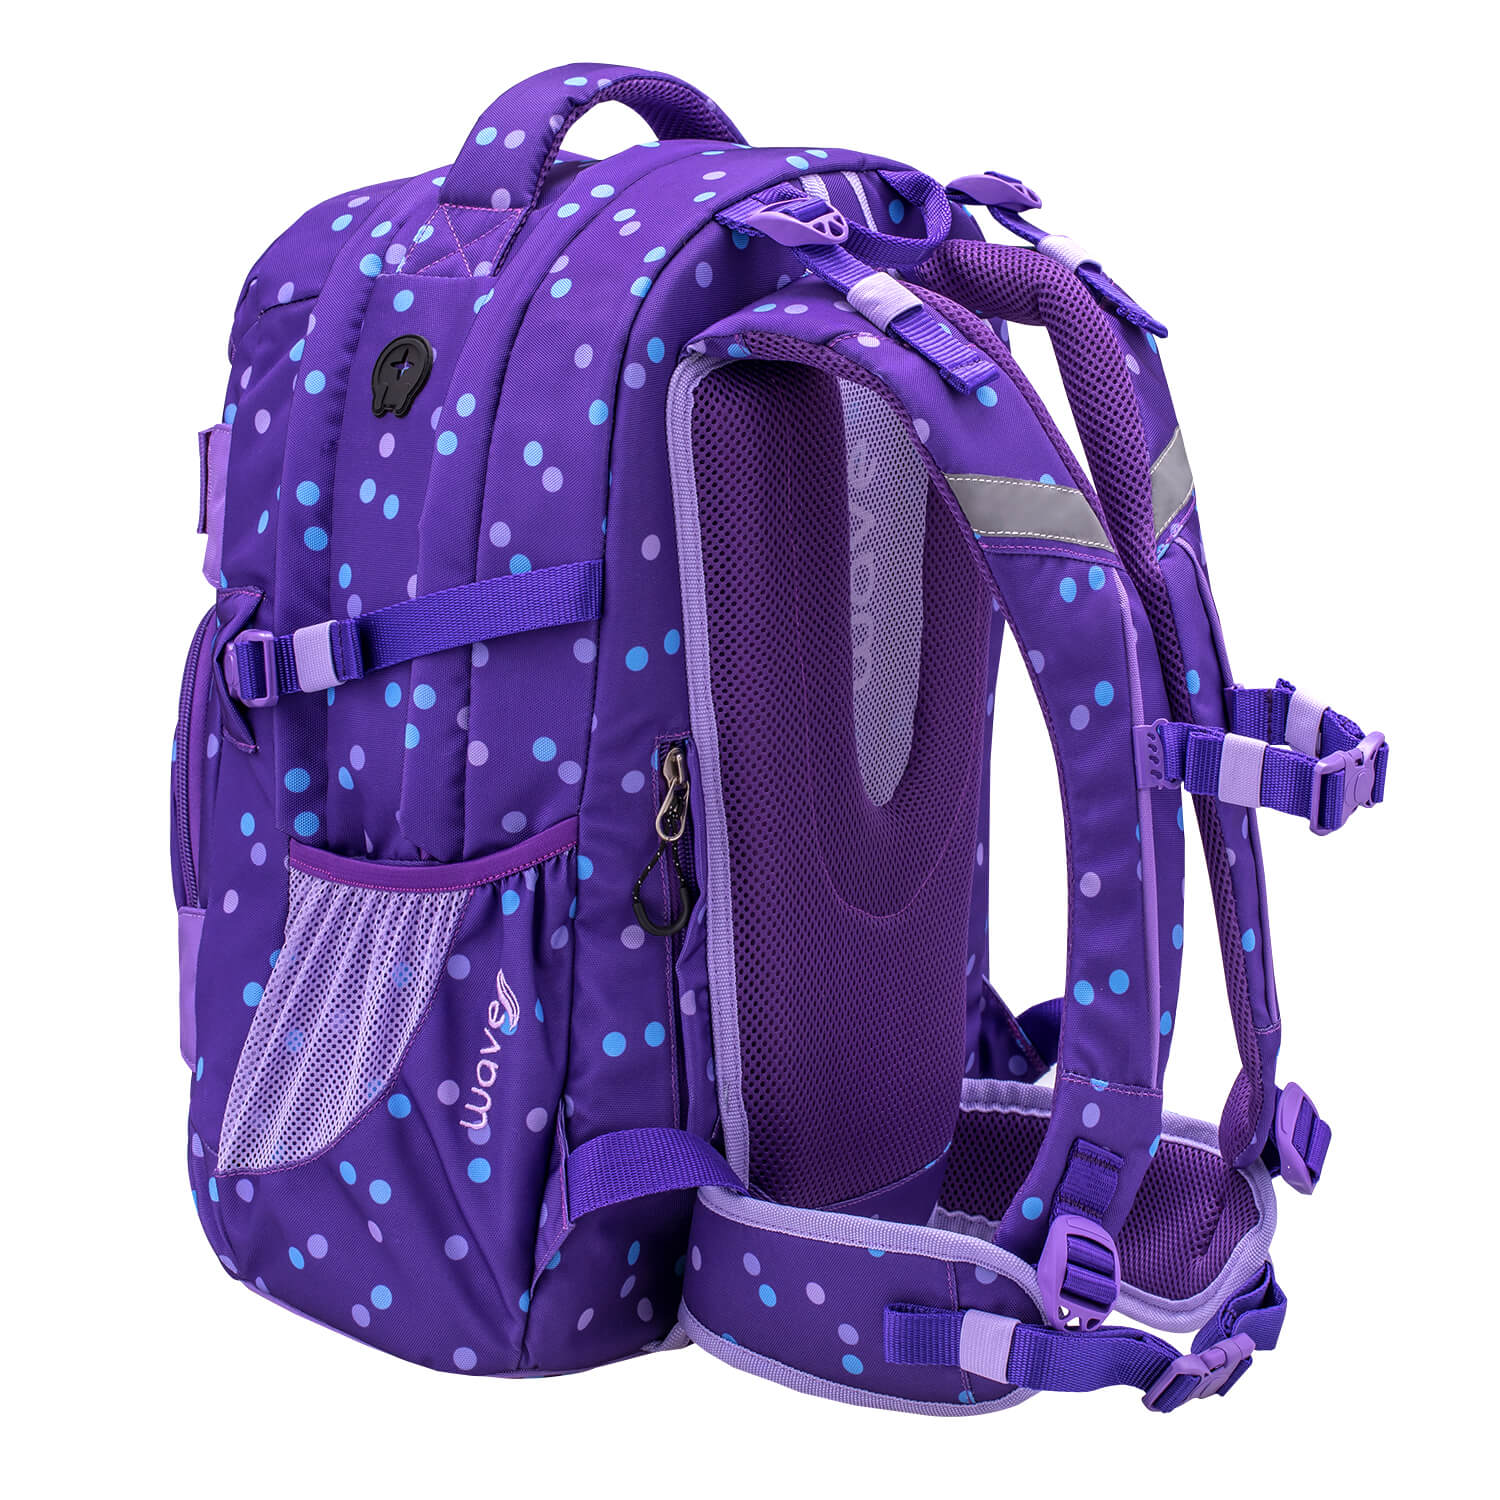 Wave Infinity Purple Dots school backpack Set 2 Pcs